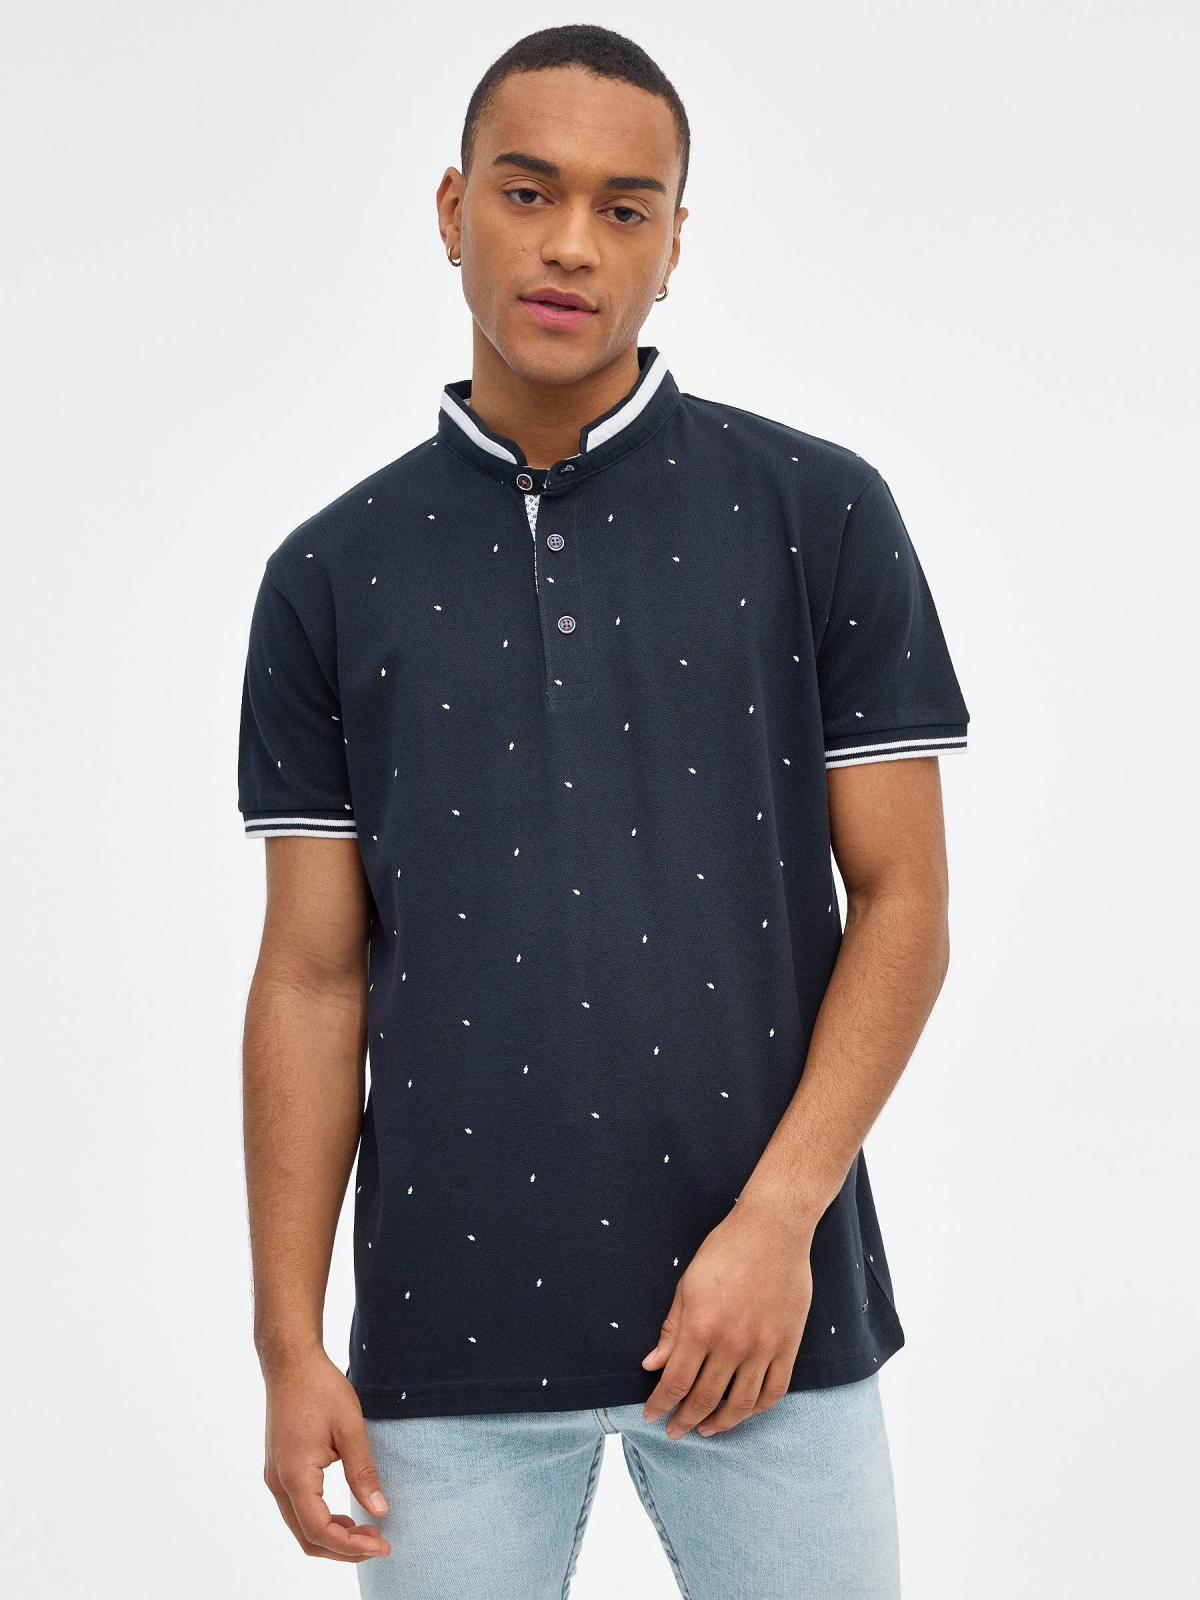 Mini-geometric print polo shirt navy middle front view